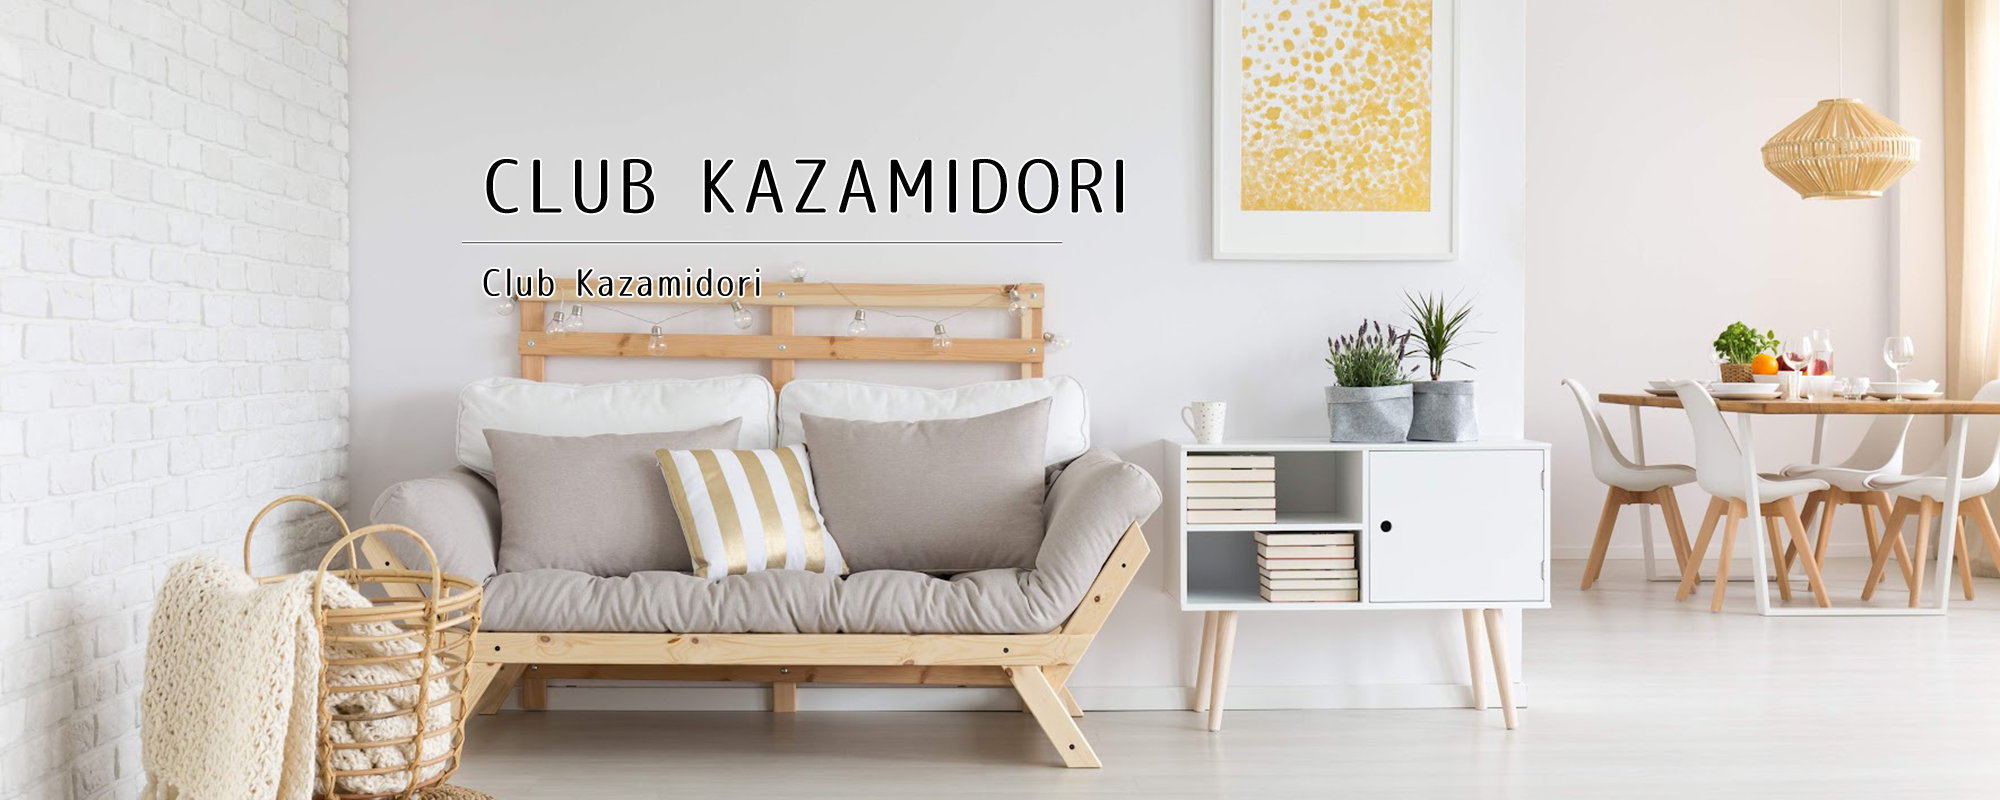 CLUB KAZAMIDORI